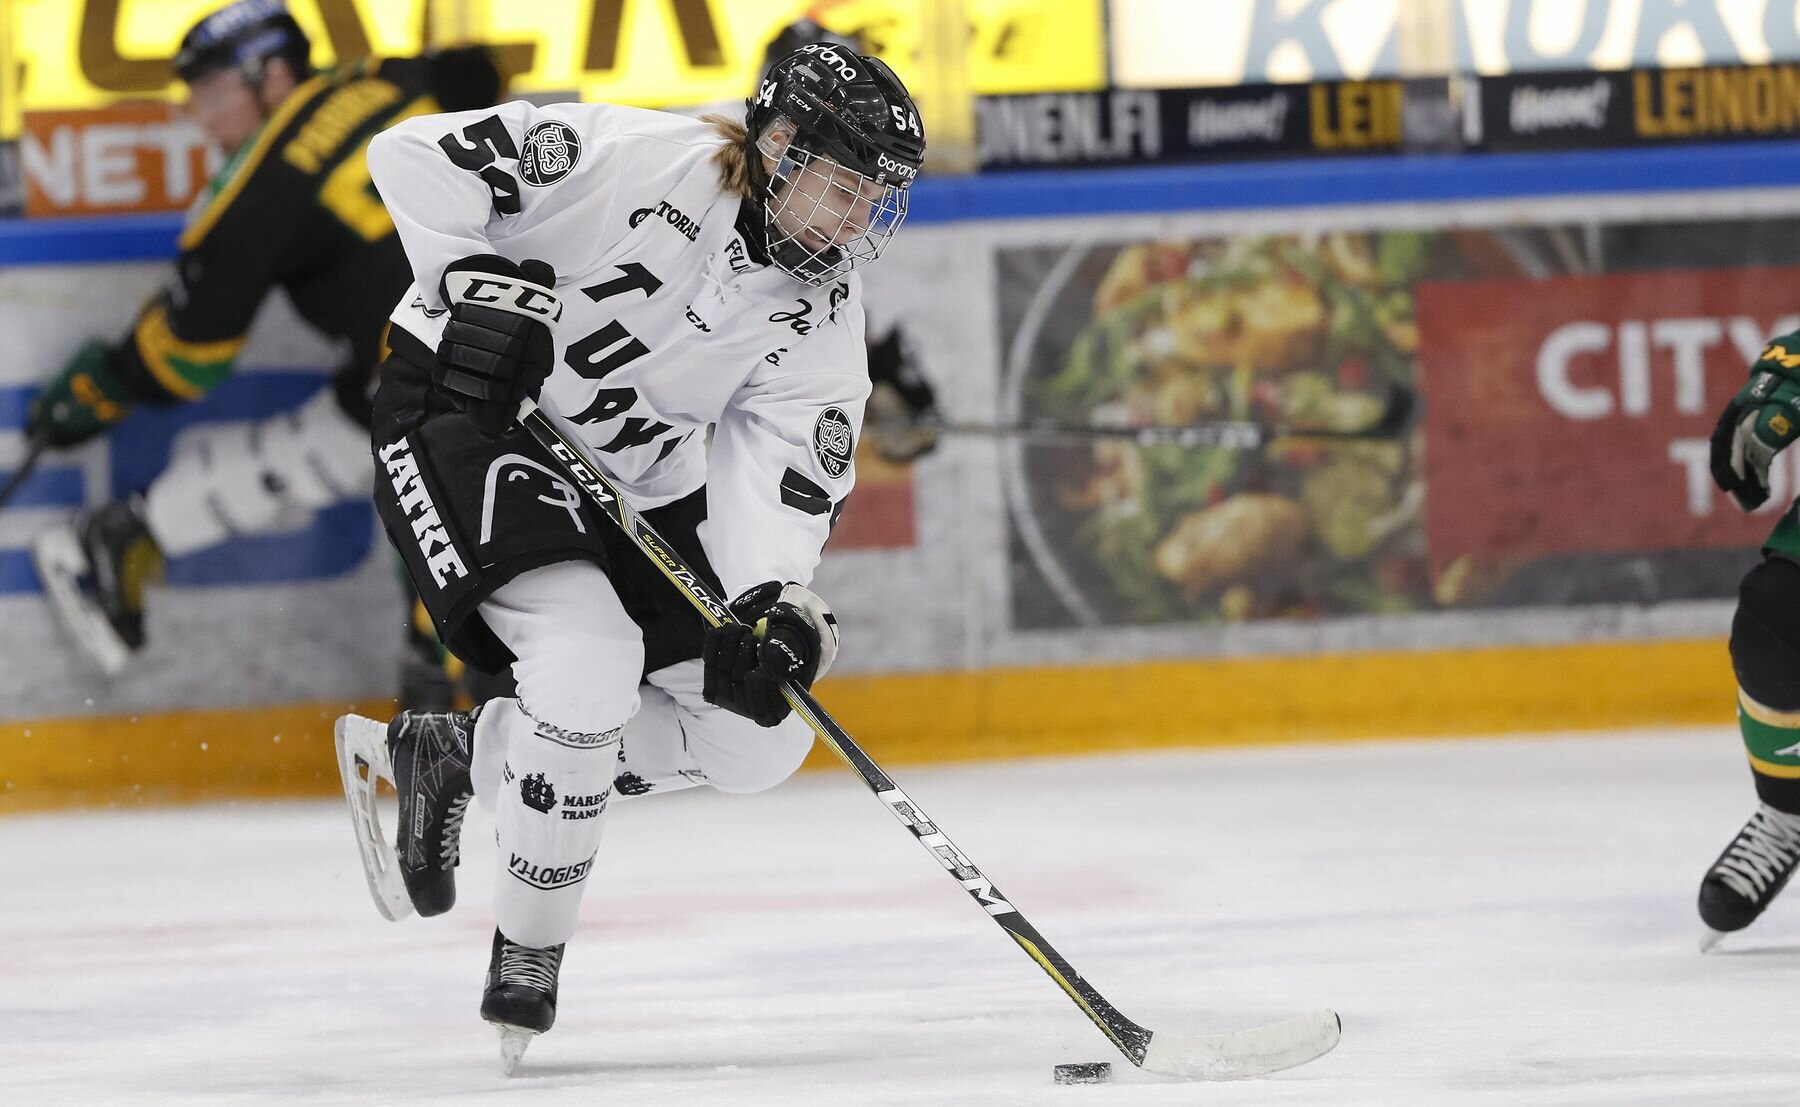 2019 NHL Draft Prospect Profile: Kaapo Kakko - NextGen Hockey